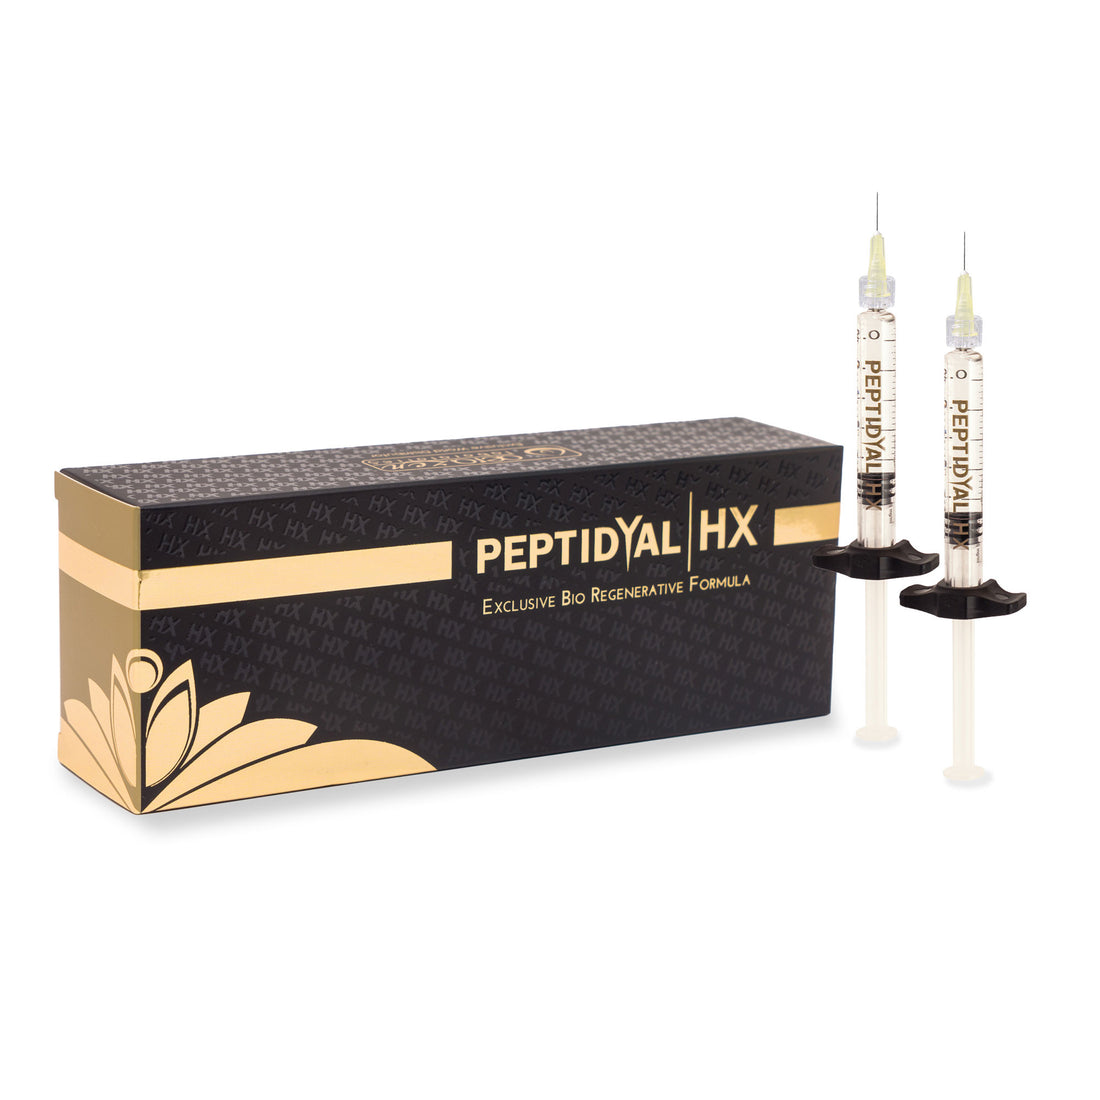 Peptidyal HX - Exclusive Bio Regenerative Formula